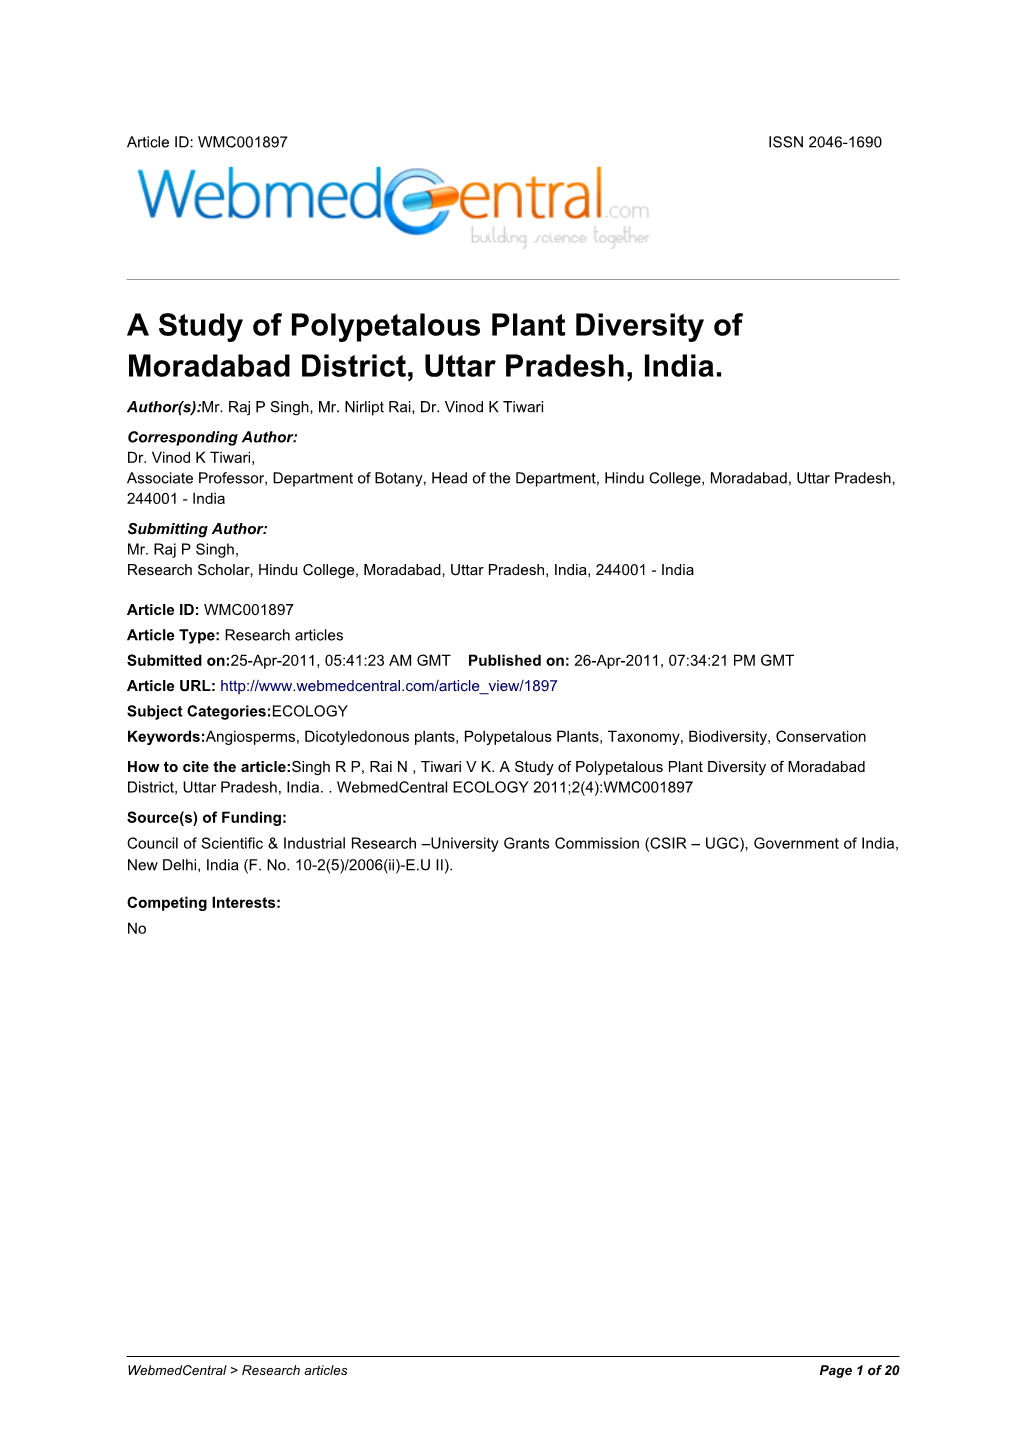 A Study of Polypetalous Plant Diversity of Moradabad District, Uttar Pradesh, India